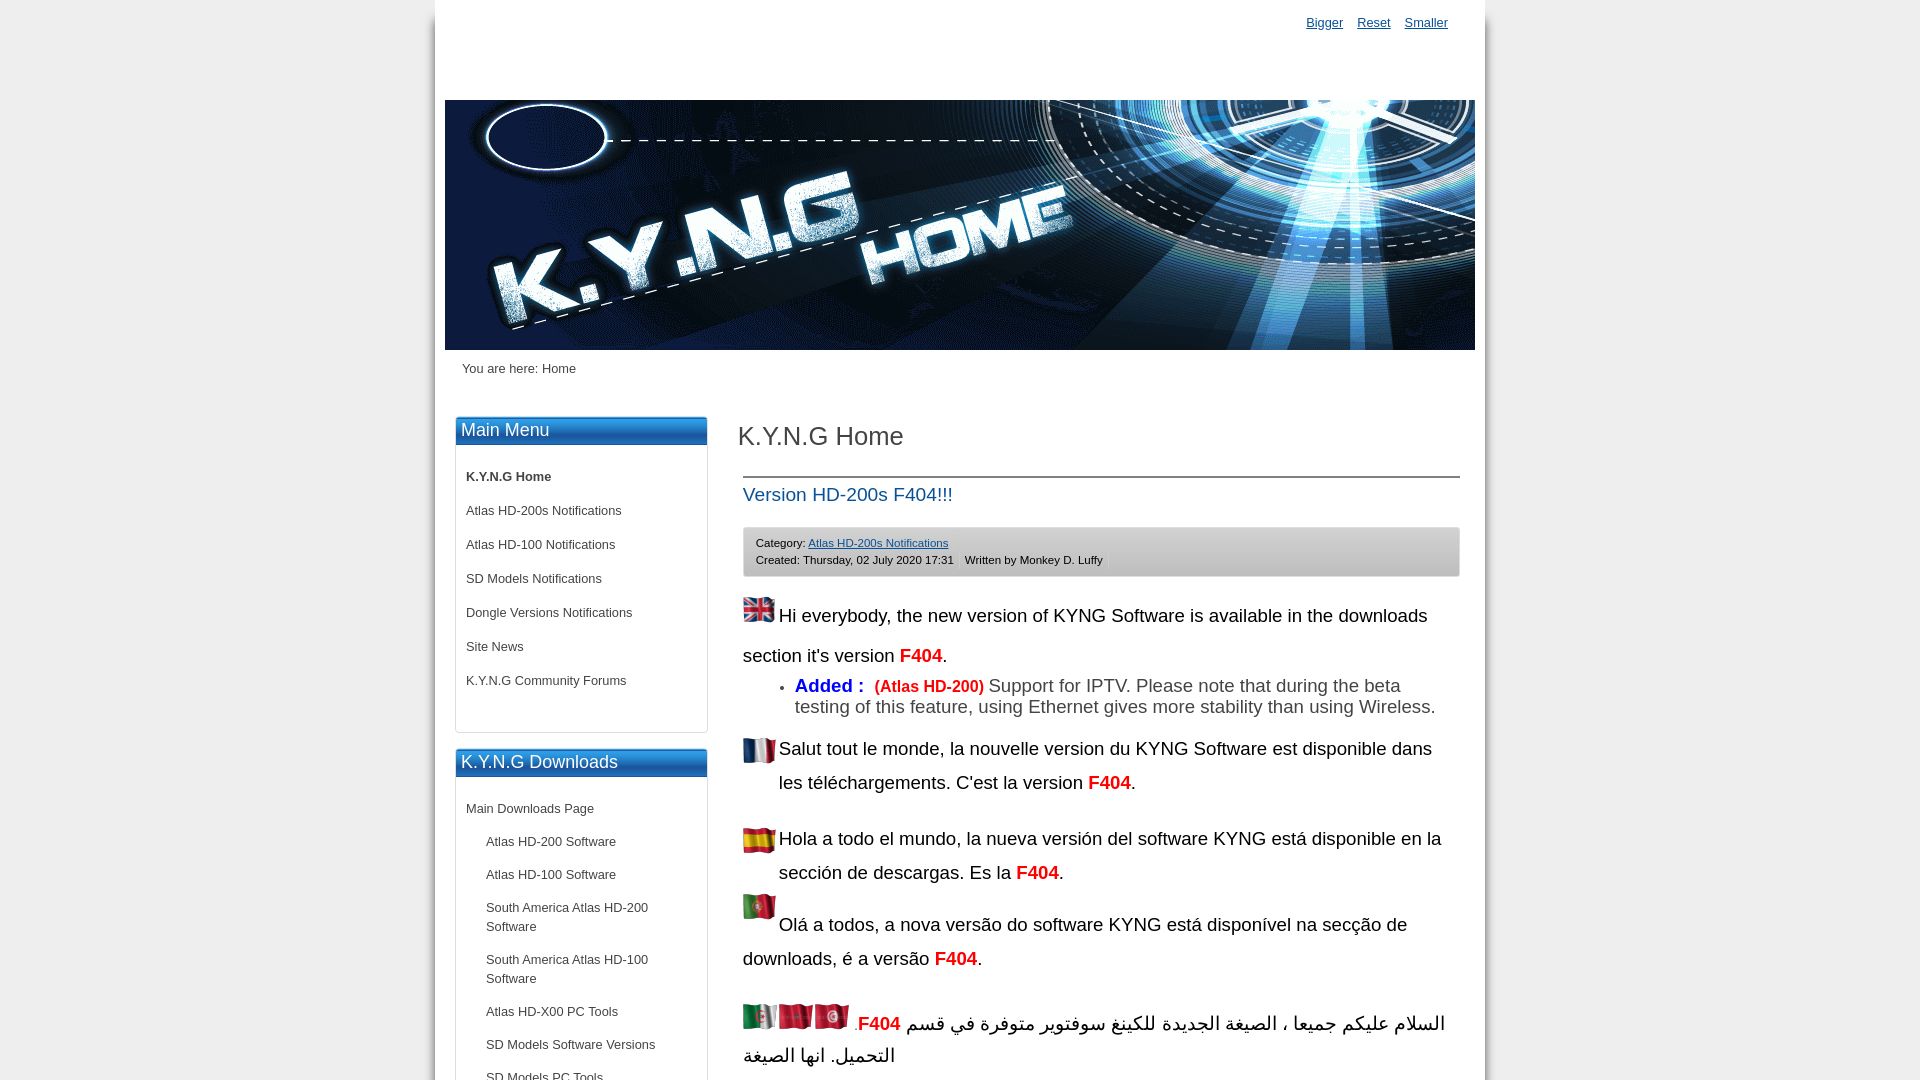 вебсайт kyngdvb.com Є   ONLINE